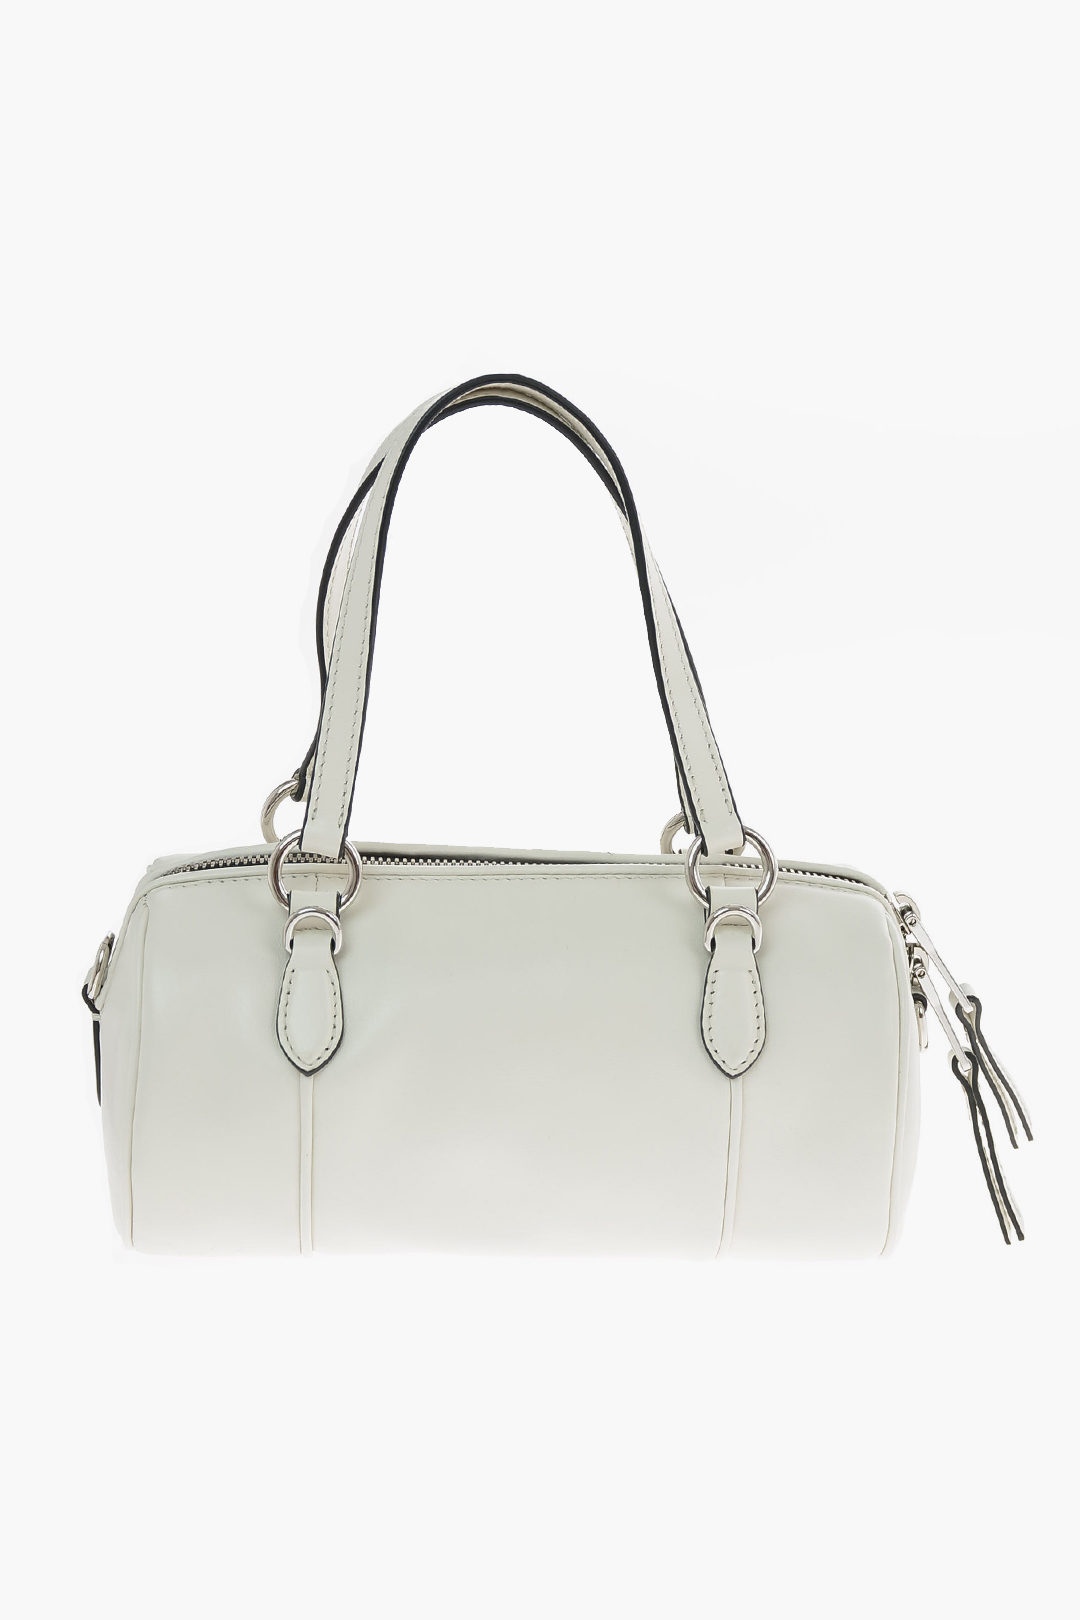 Bow bag leather handbag Miu Miu White in Leather - 31864128